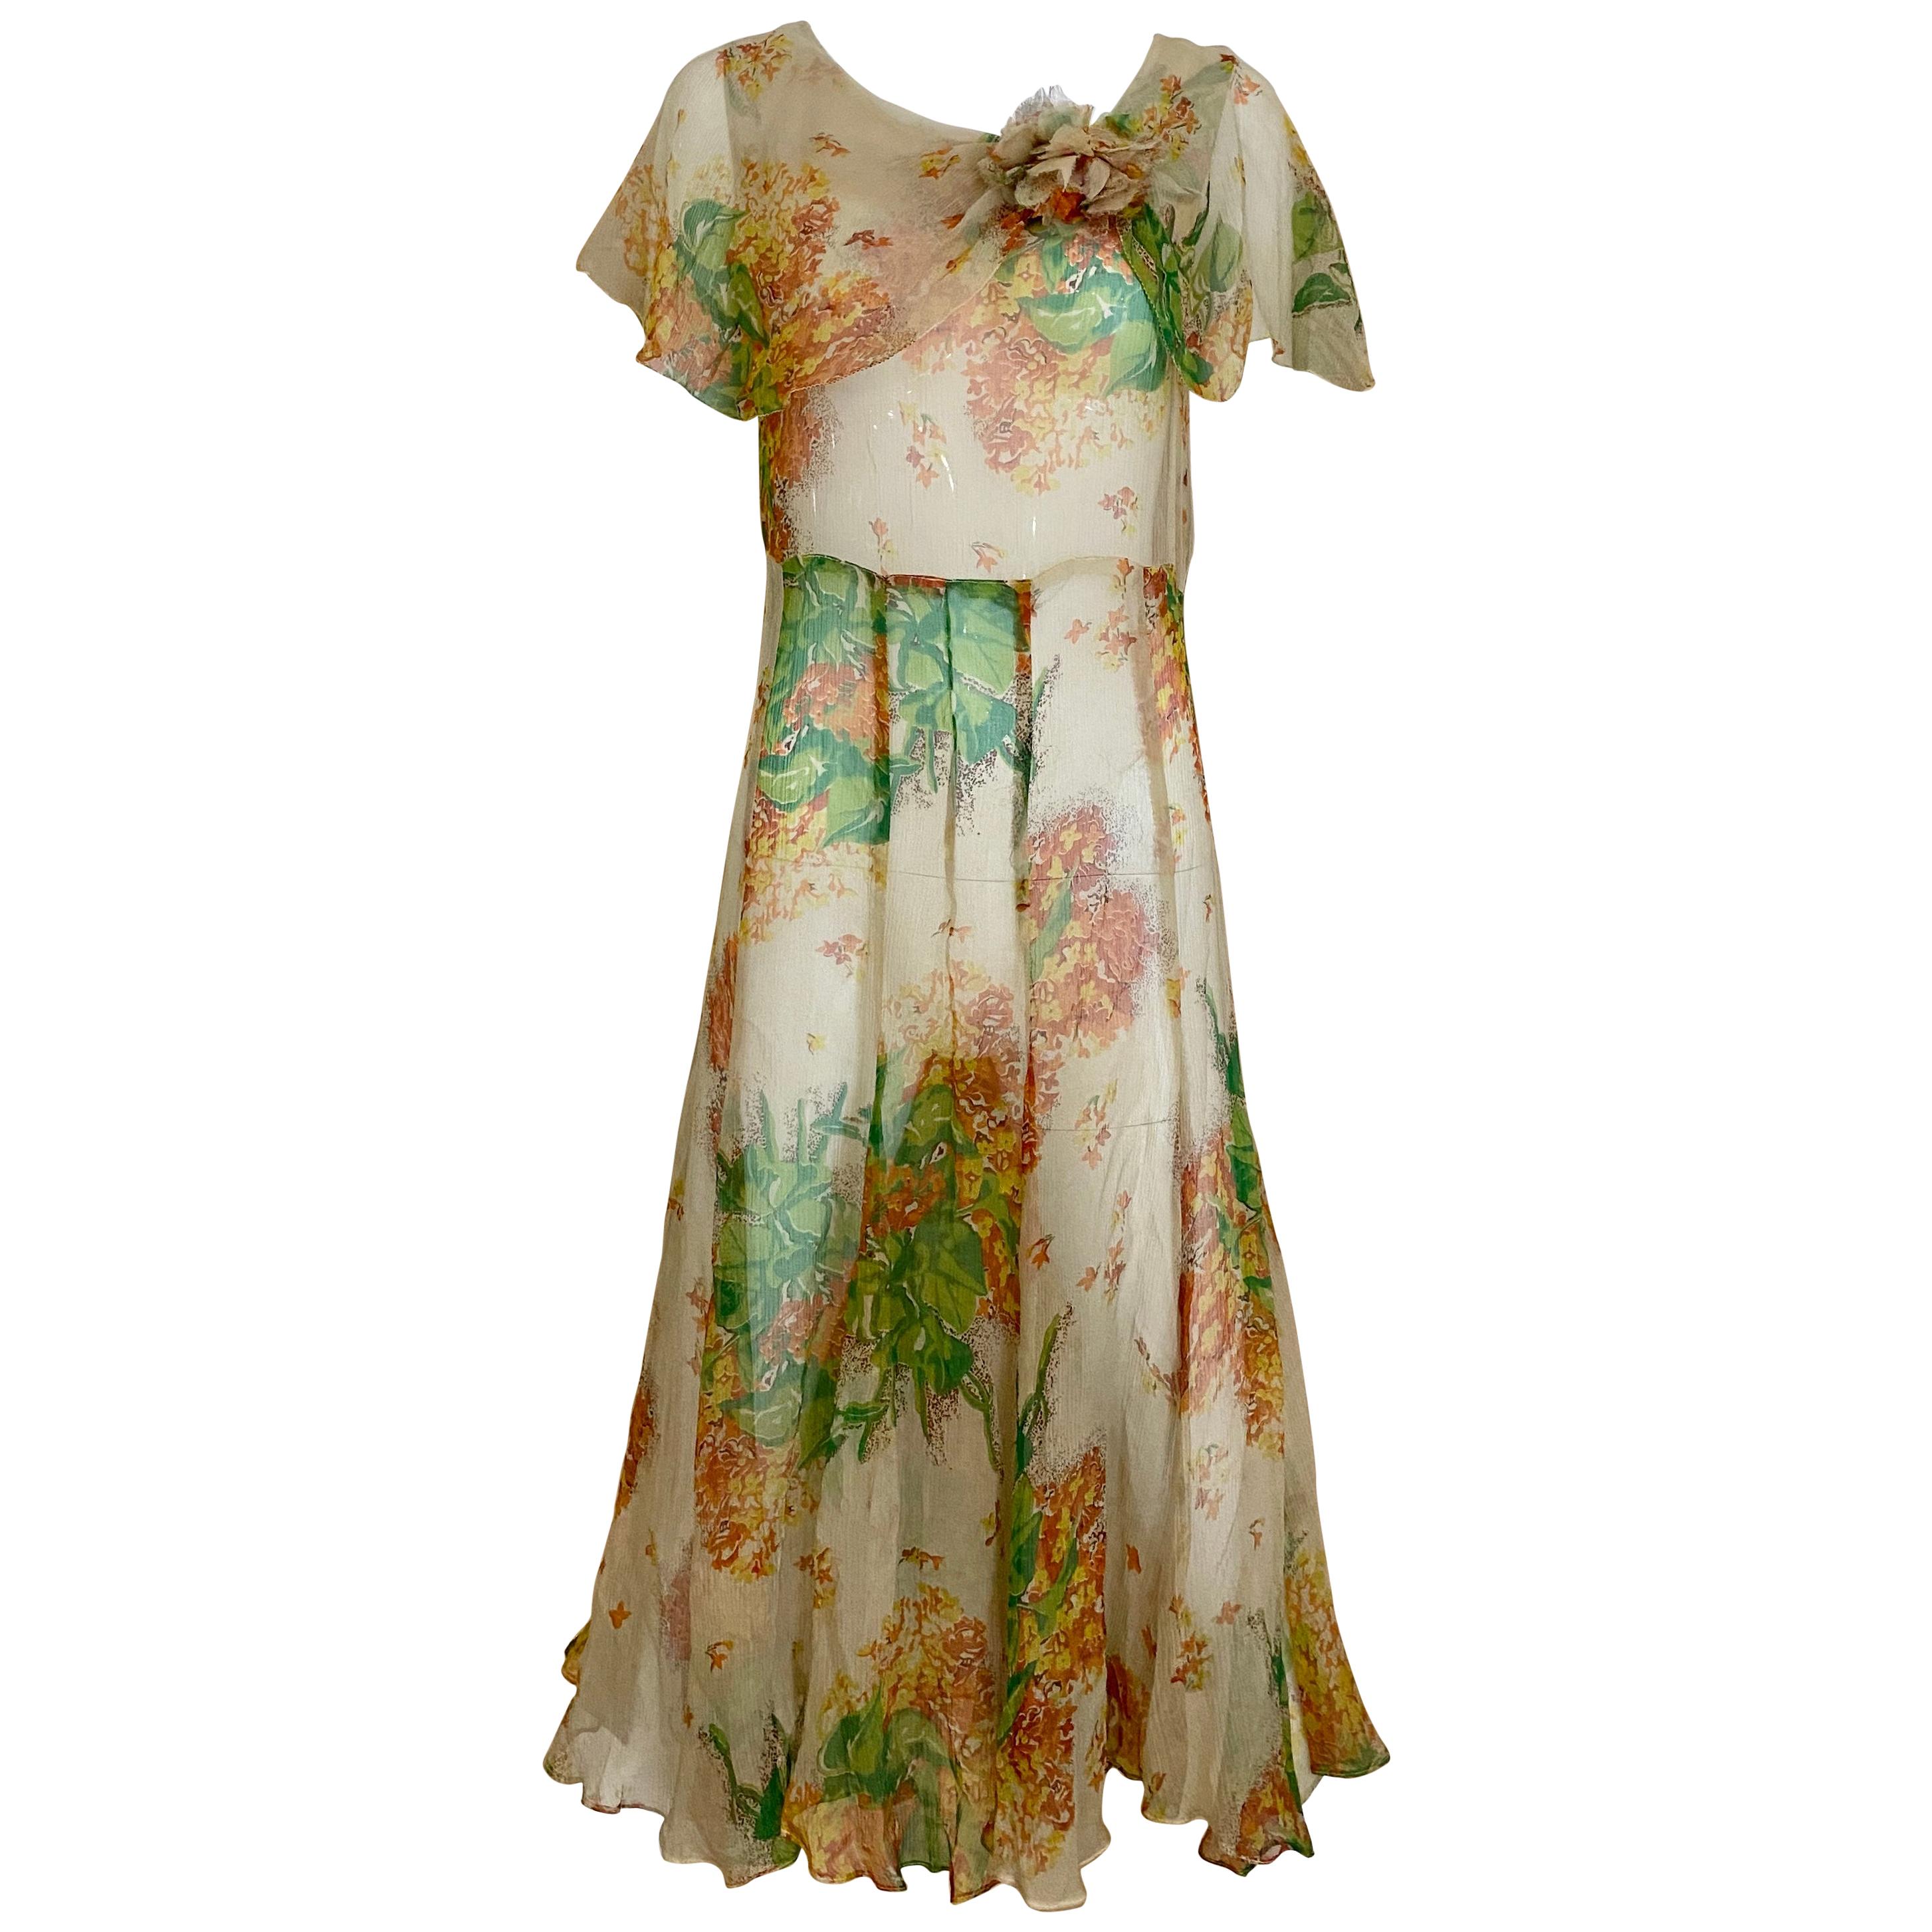  1930s Creme and Green Floral Print Silk Chiffon Day Dress